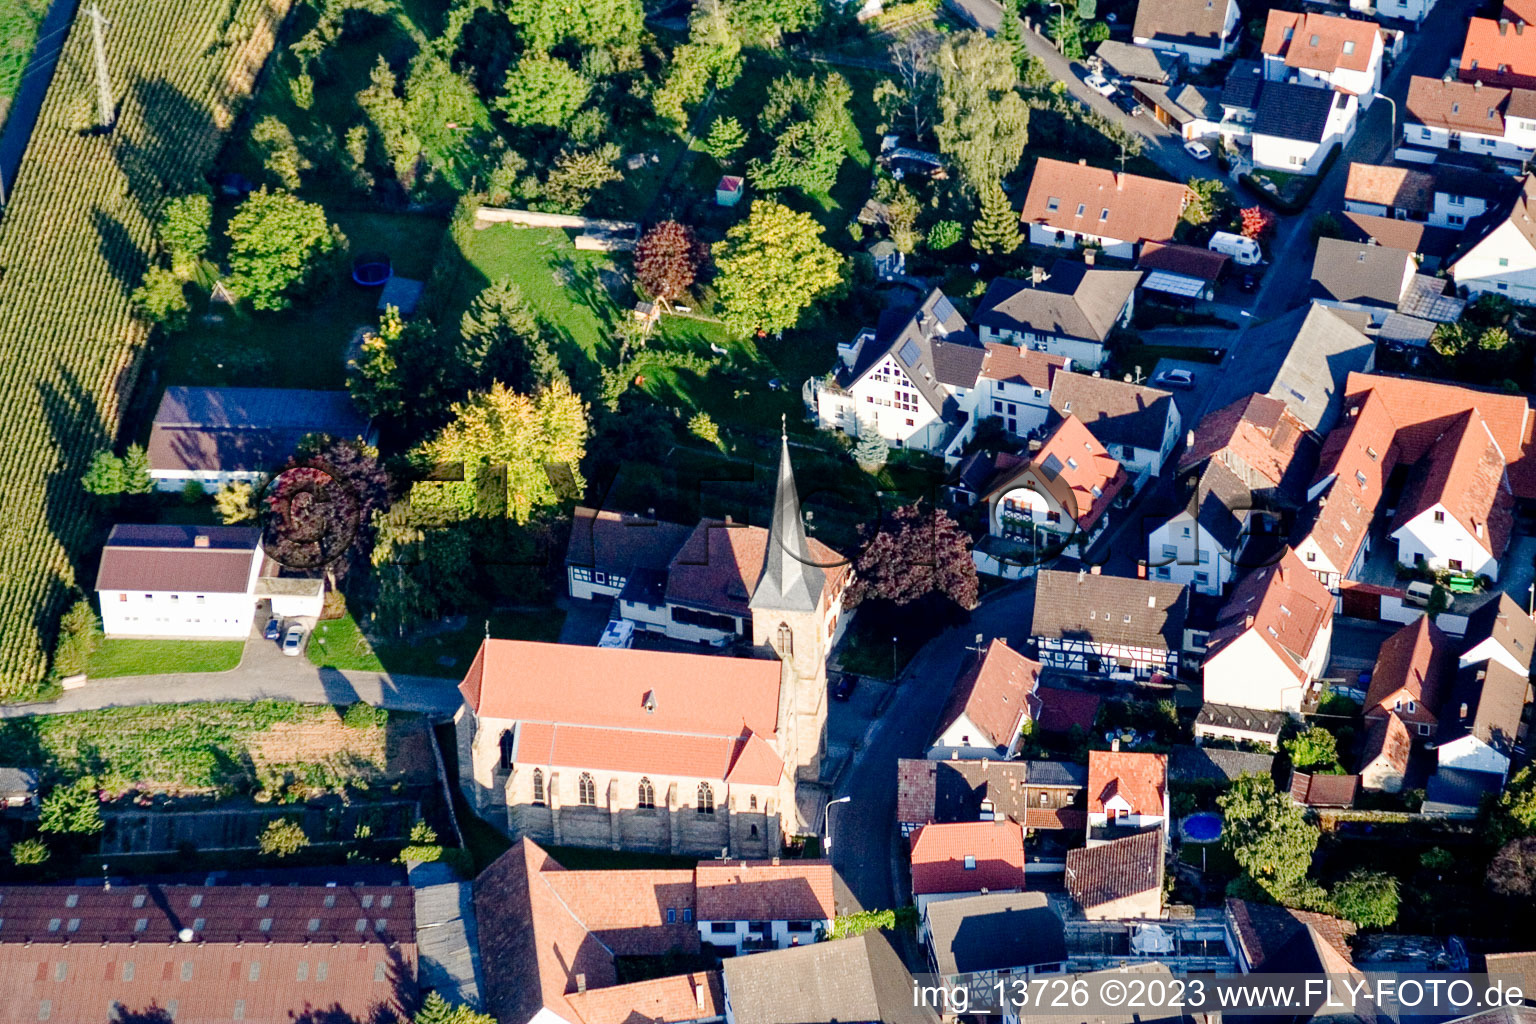 Aerial view of Church building in the village of in the district Ingenheim in Billigheim-Ingenheim in the state Rhineland-Palatinate